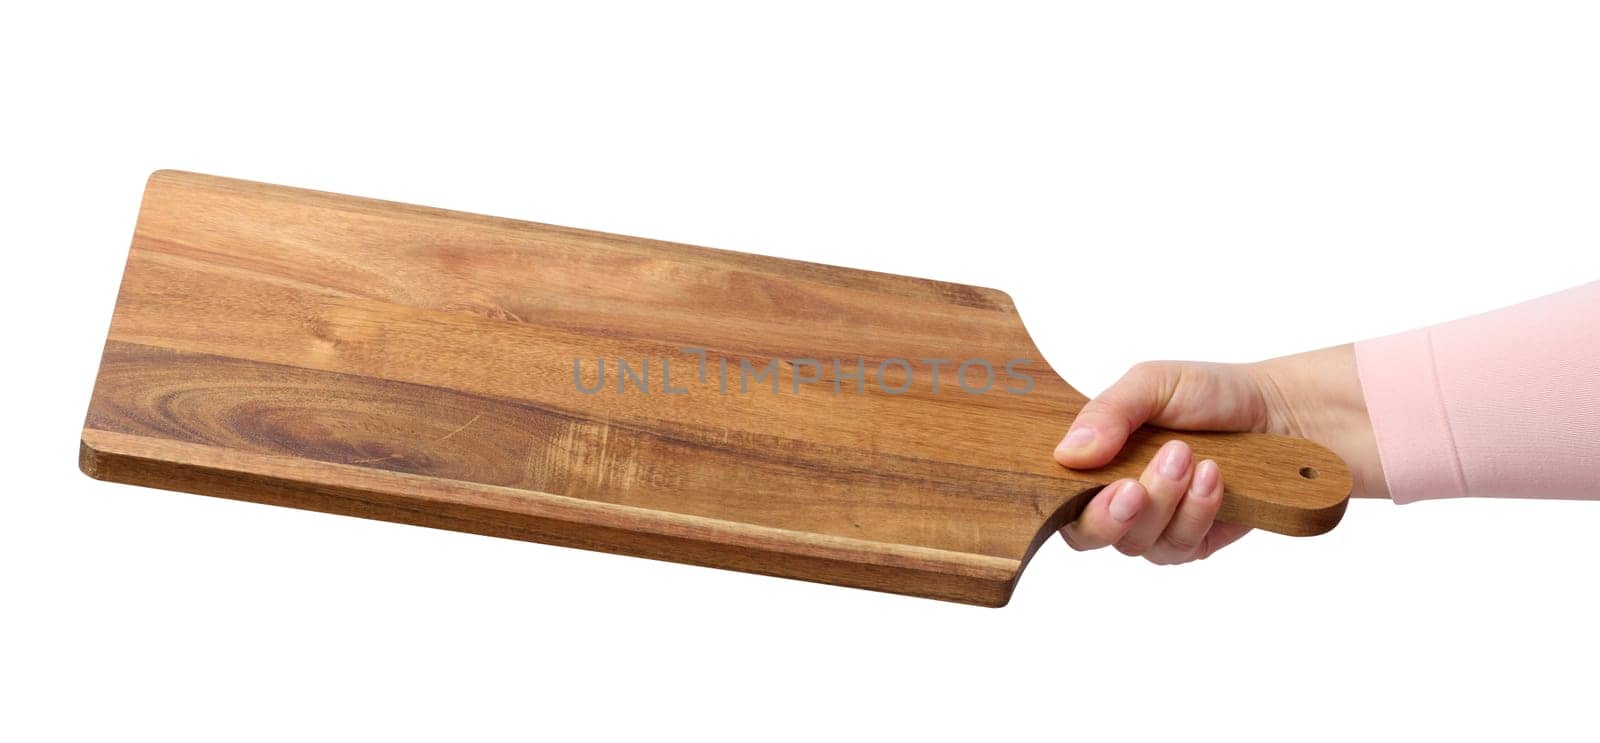 Female hand holding a rectangular wooden cutting board kitchen board